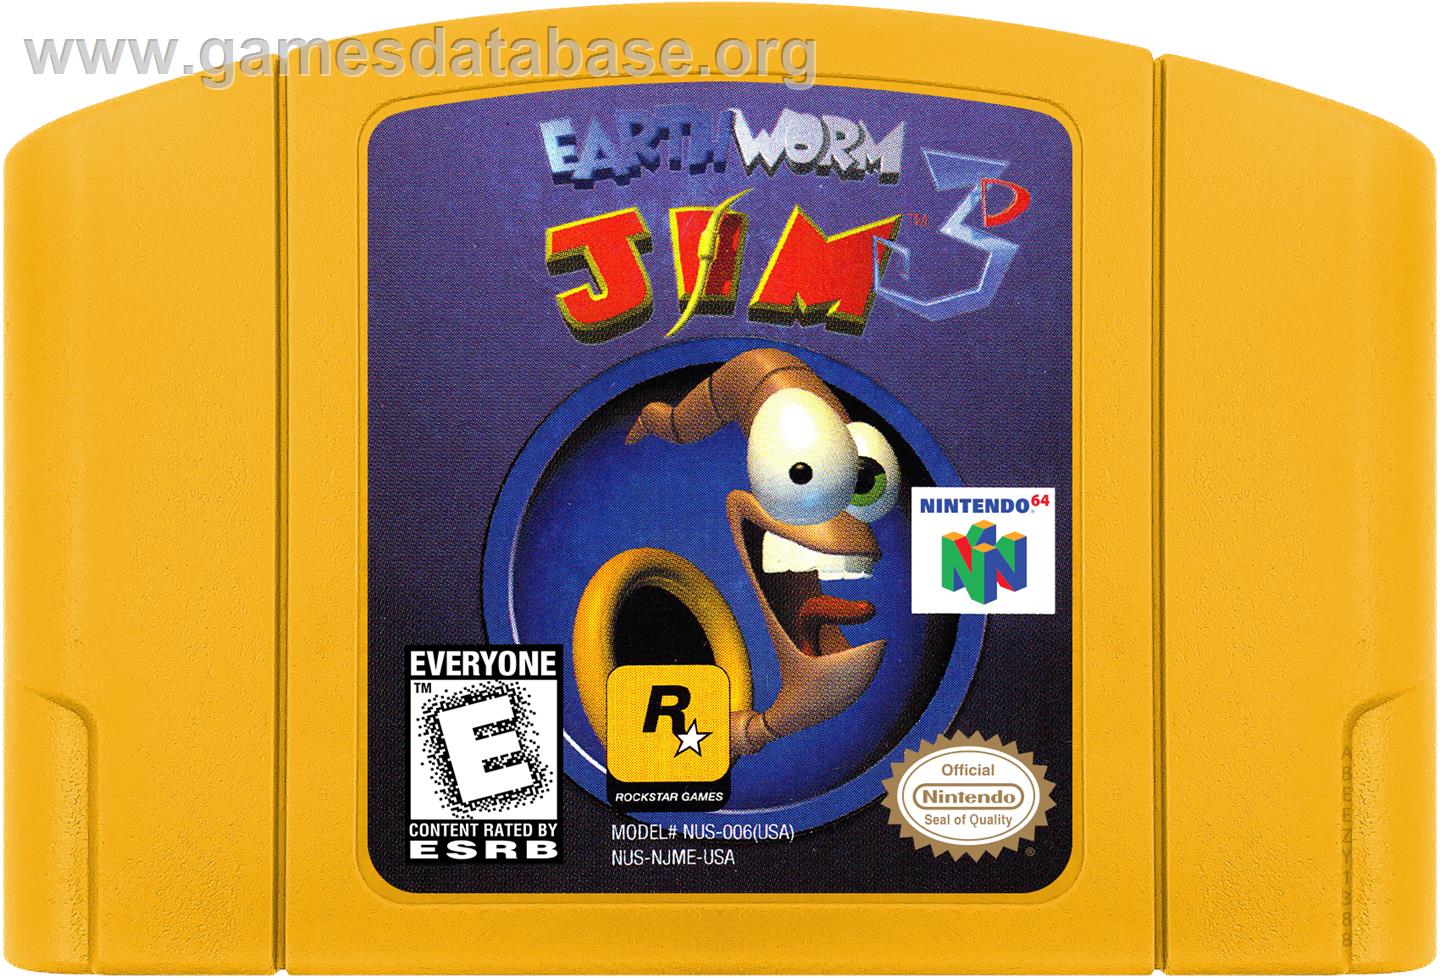 Earthworm Jim 3D - Nintendo N64 - Artwork - Cartridge